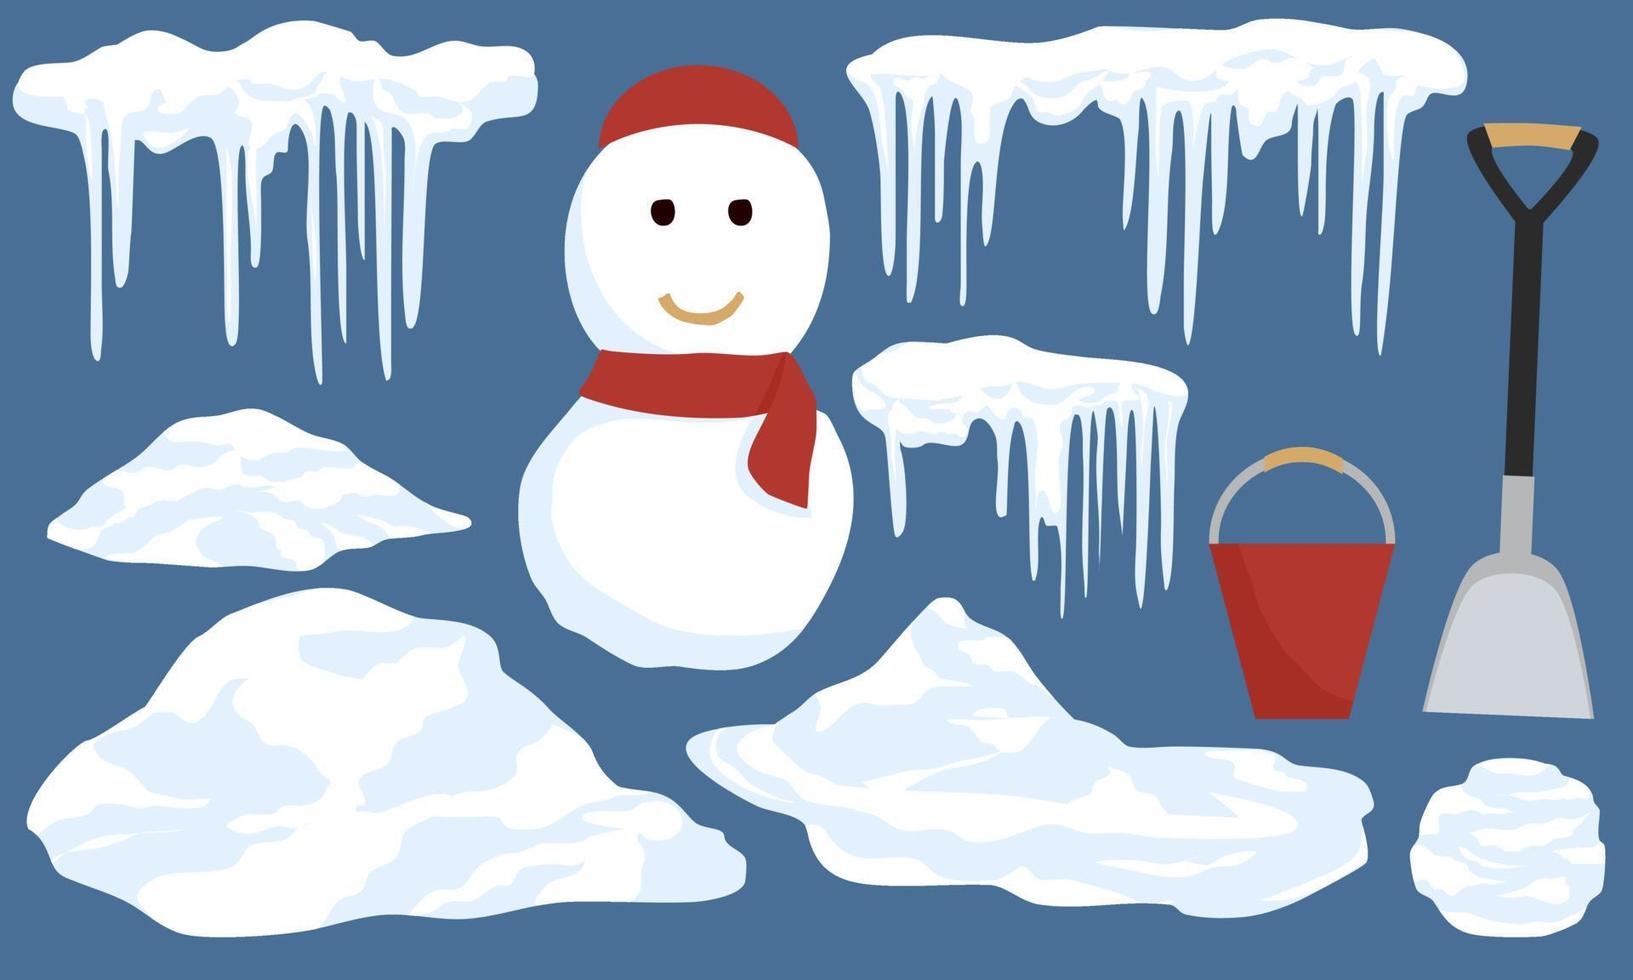 snow, icicles, snowman winter element decoration vector